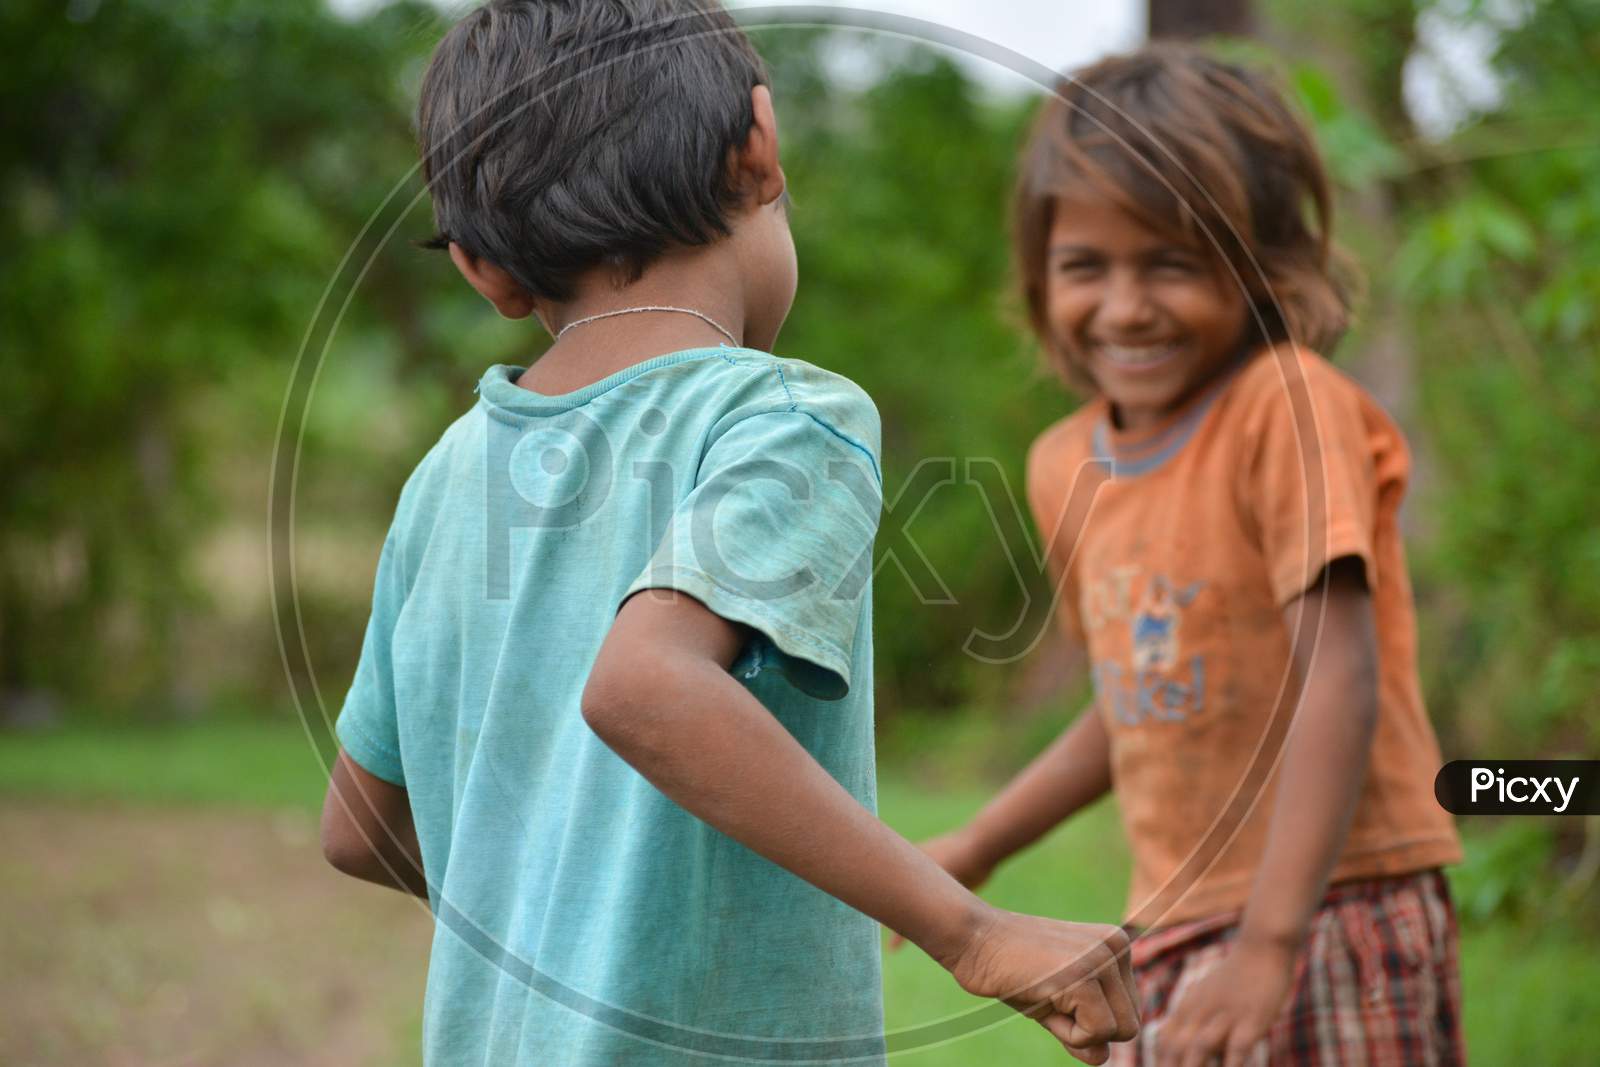 TIKAMGARH, MADHYA PRADESH, INDIA - JULY 12, 2020: Young children smiling and having fun from rural part of India.